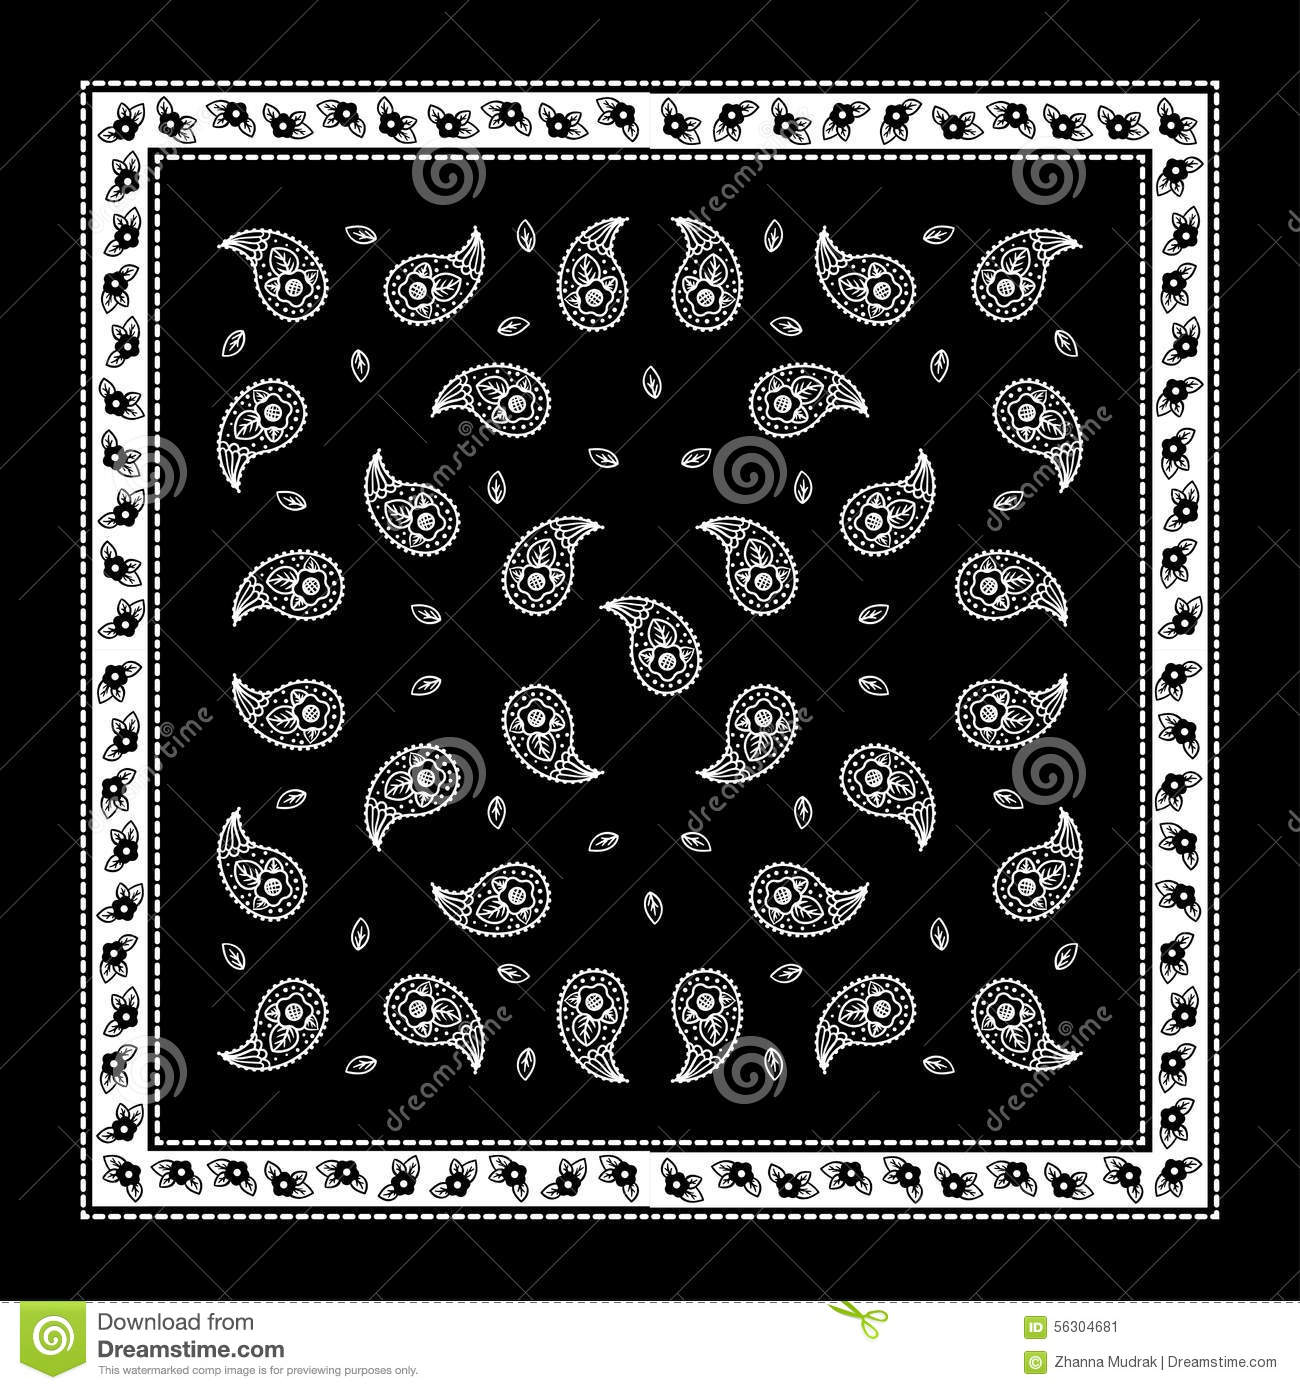 Black and White Simple Paisley Bandana Pattern